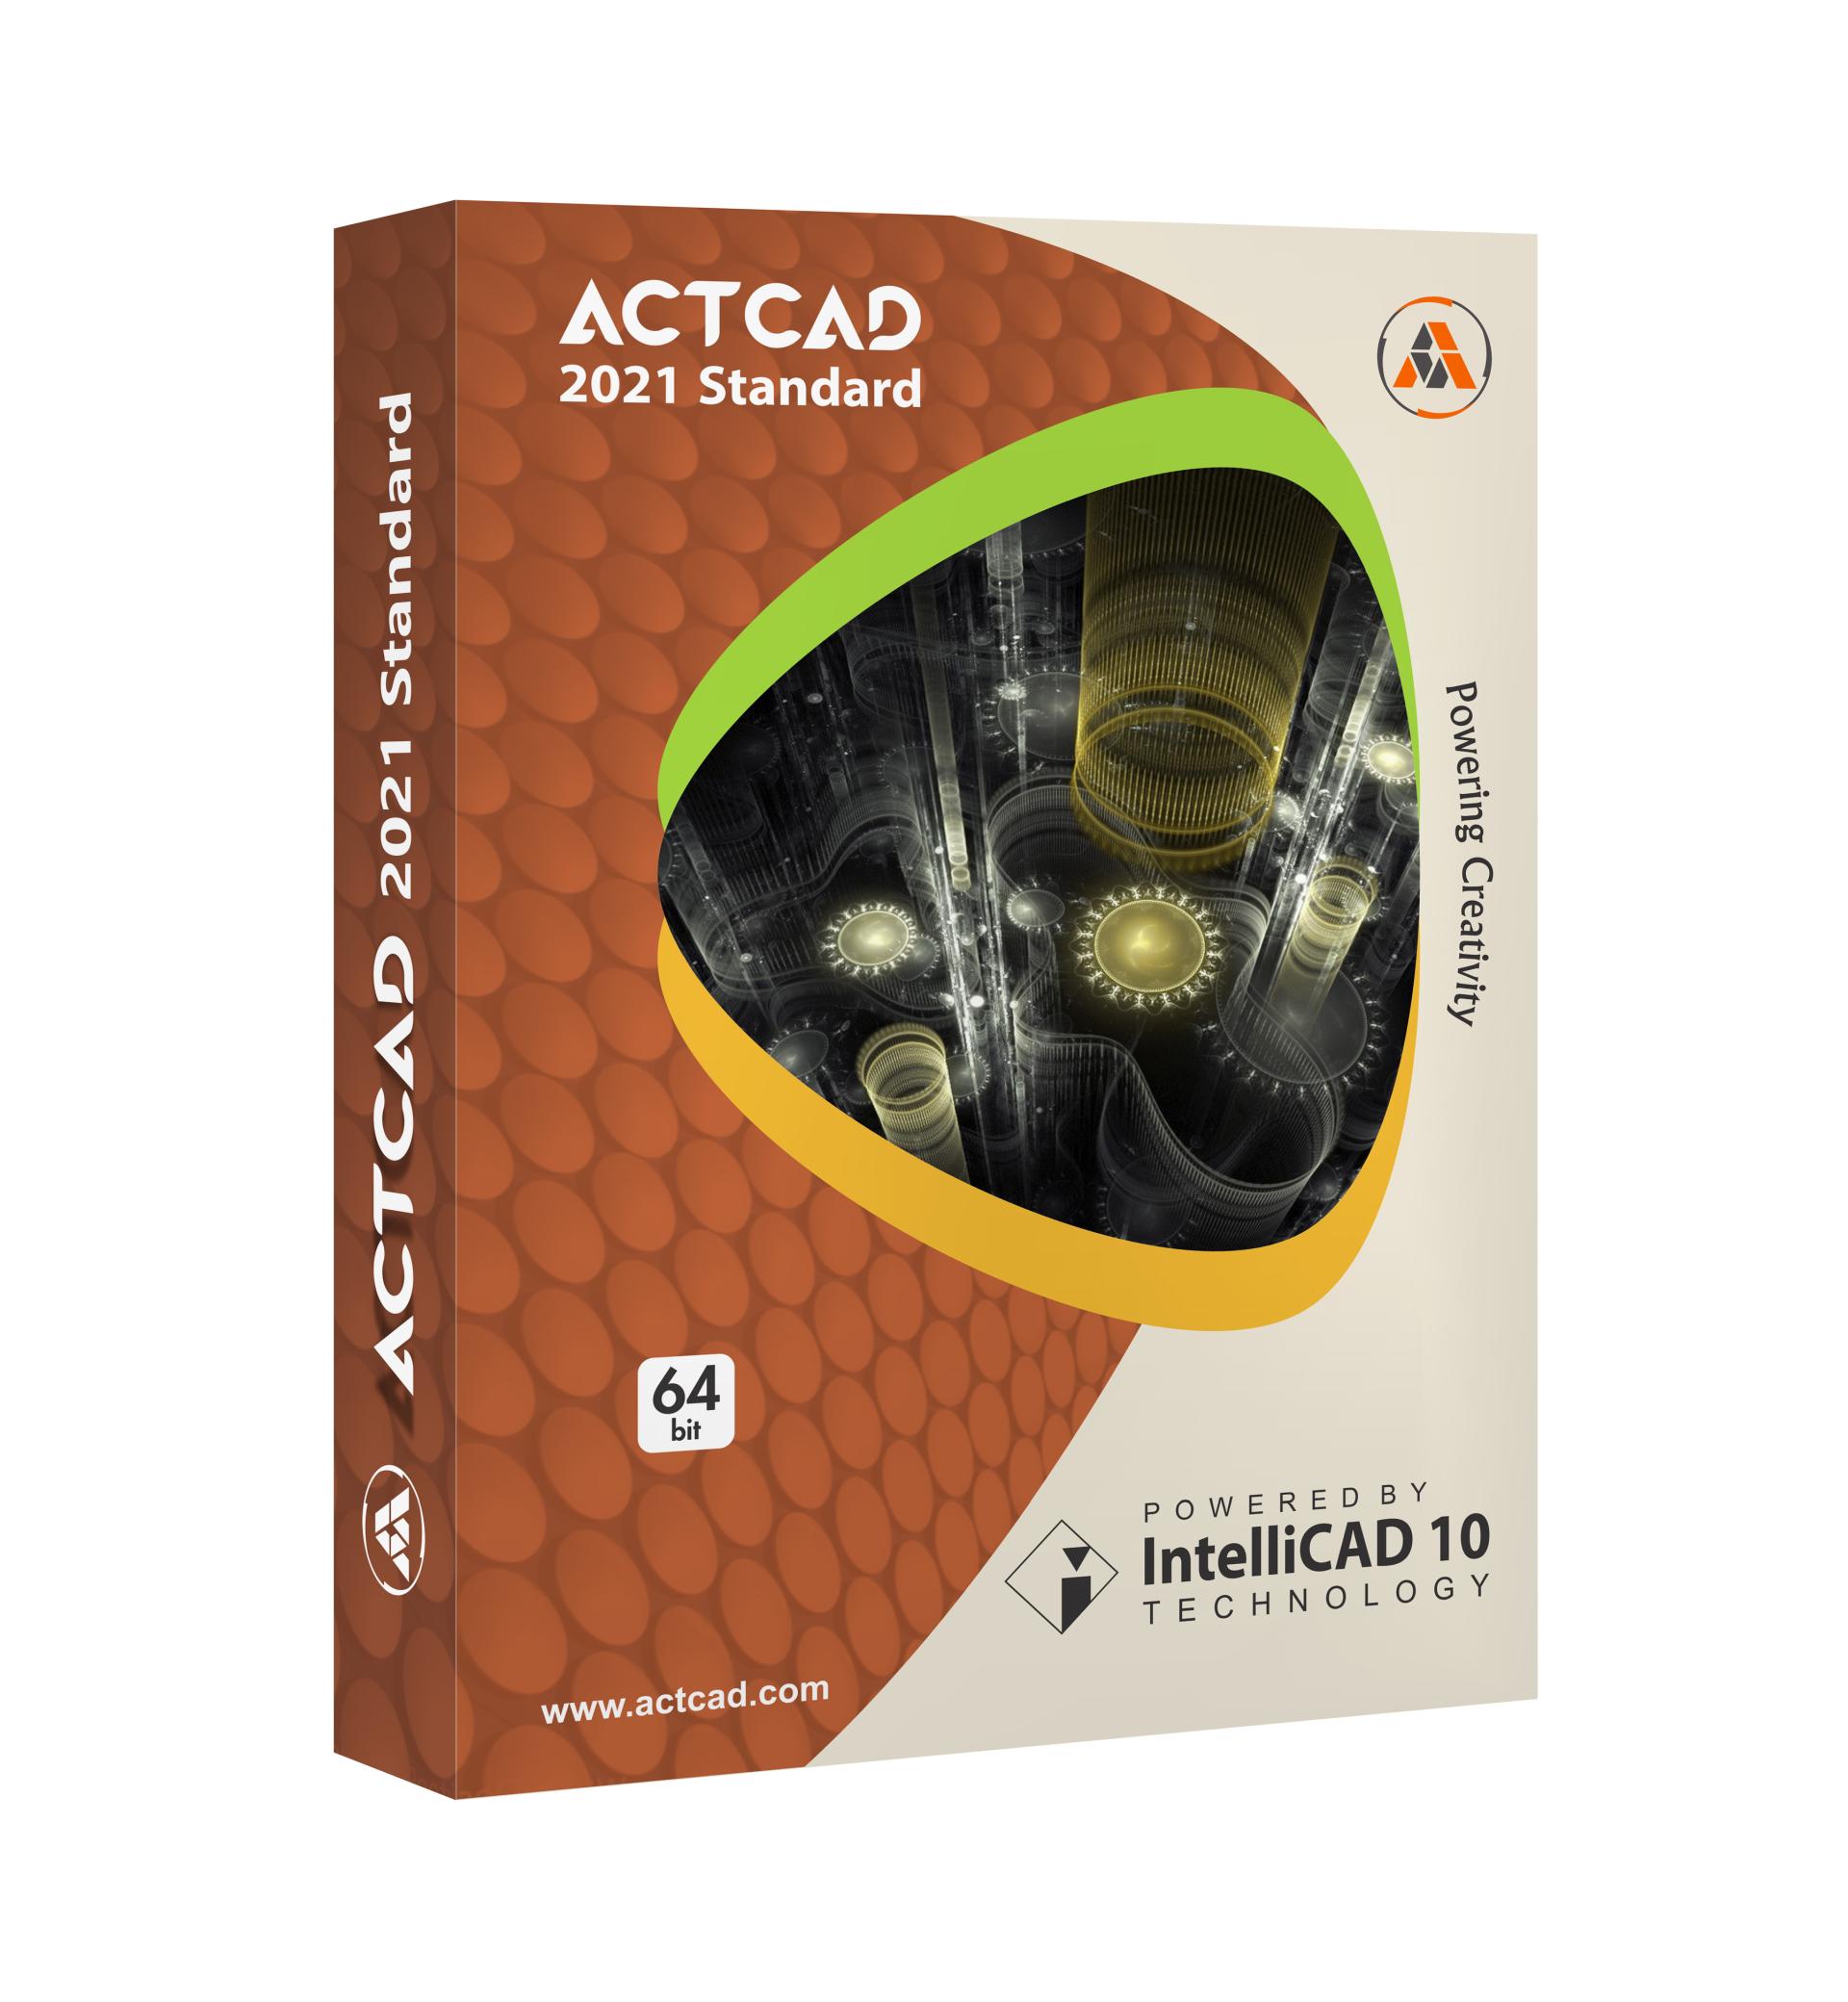 ActCAD 2021 Standard